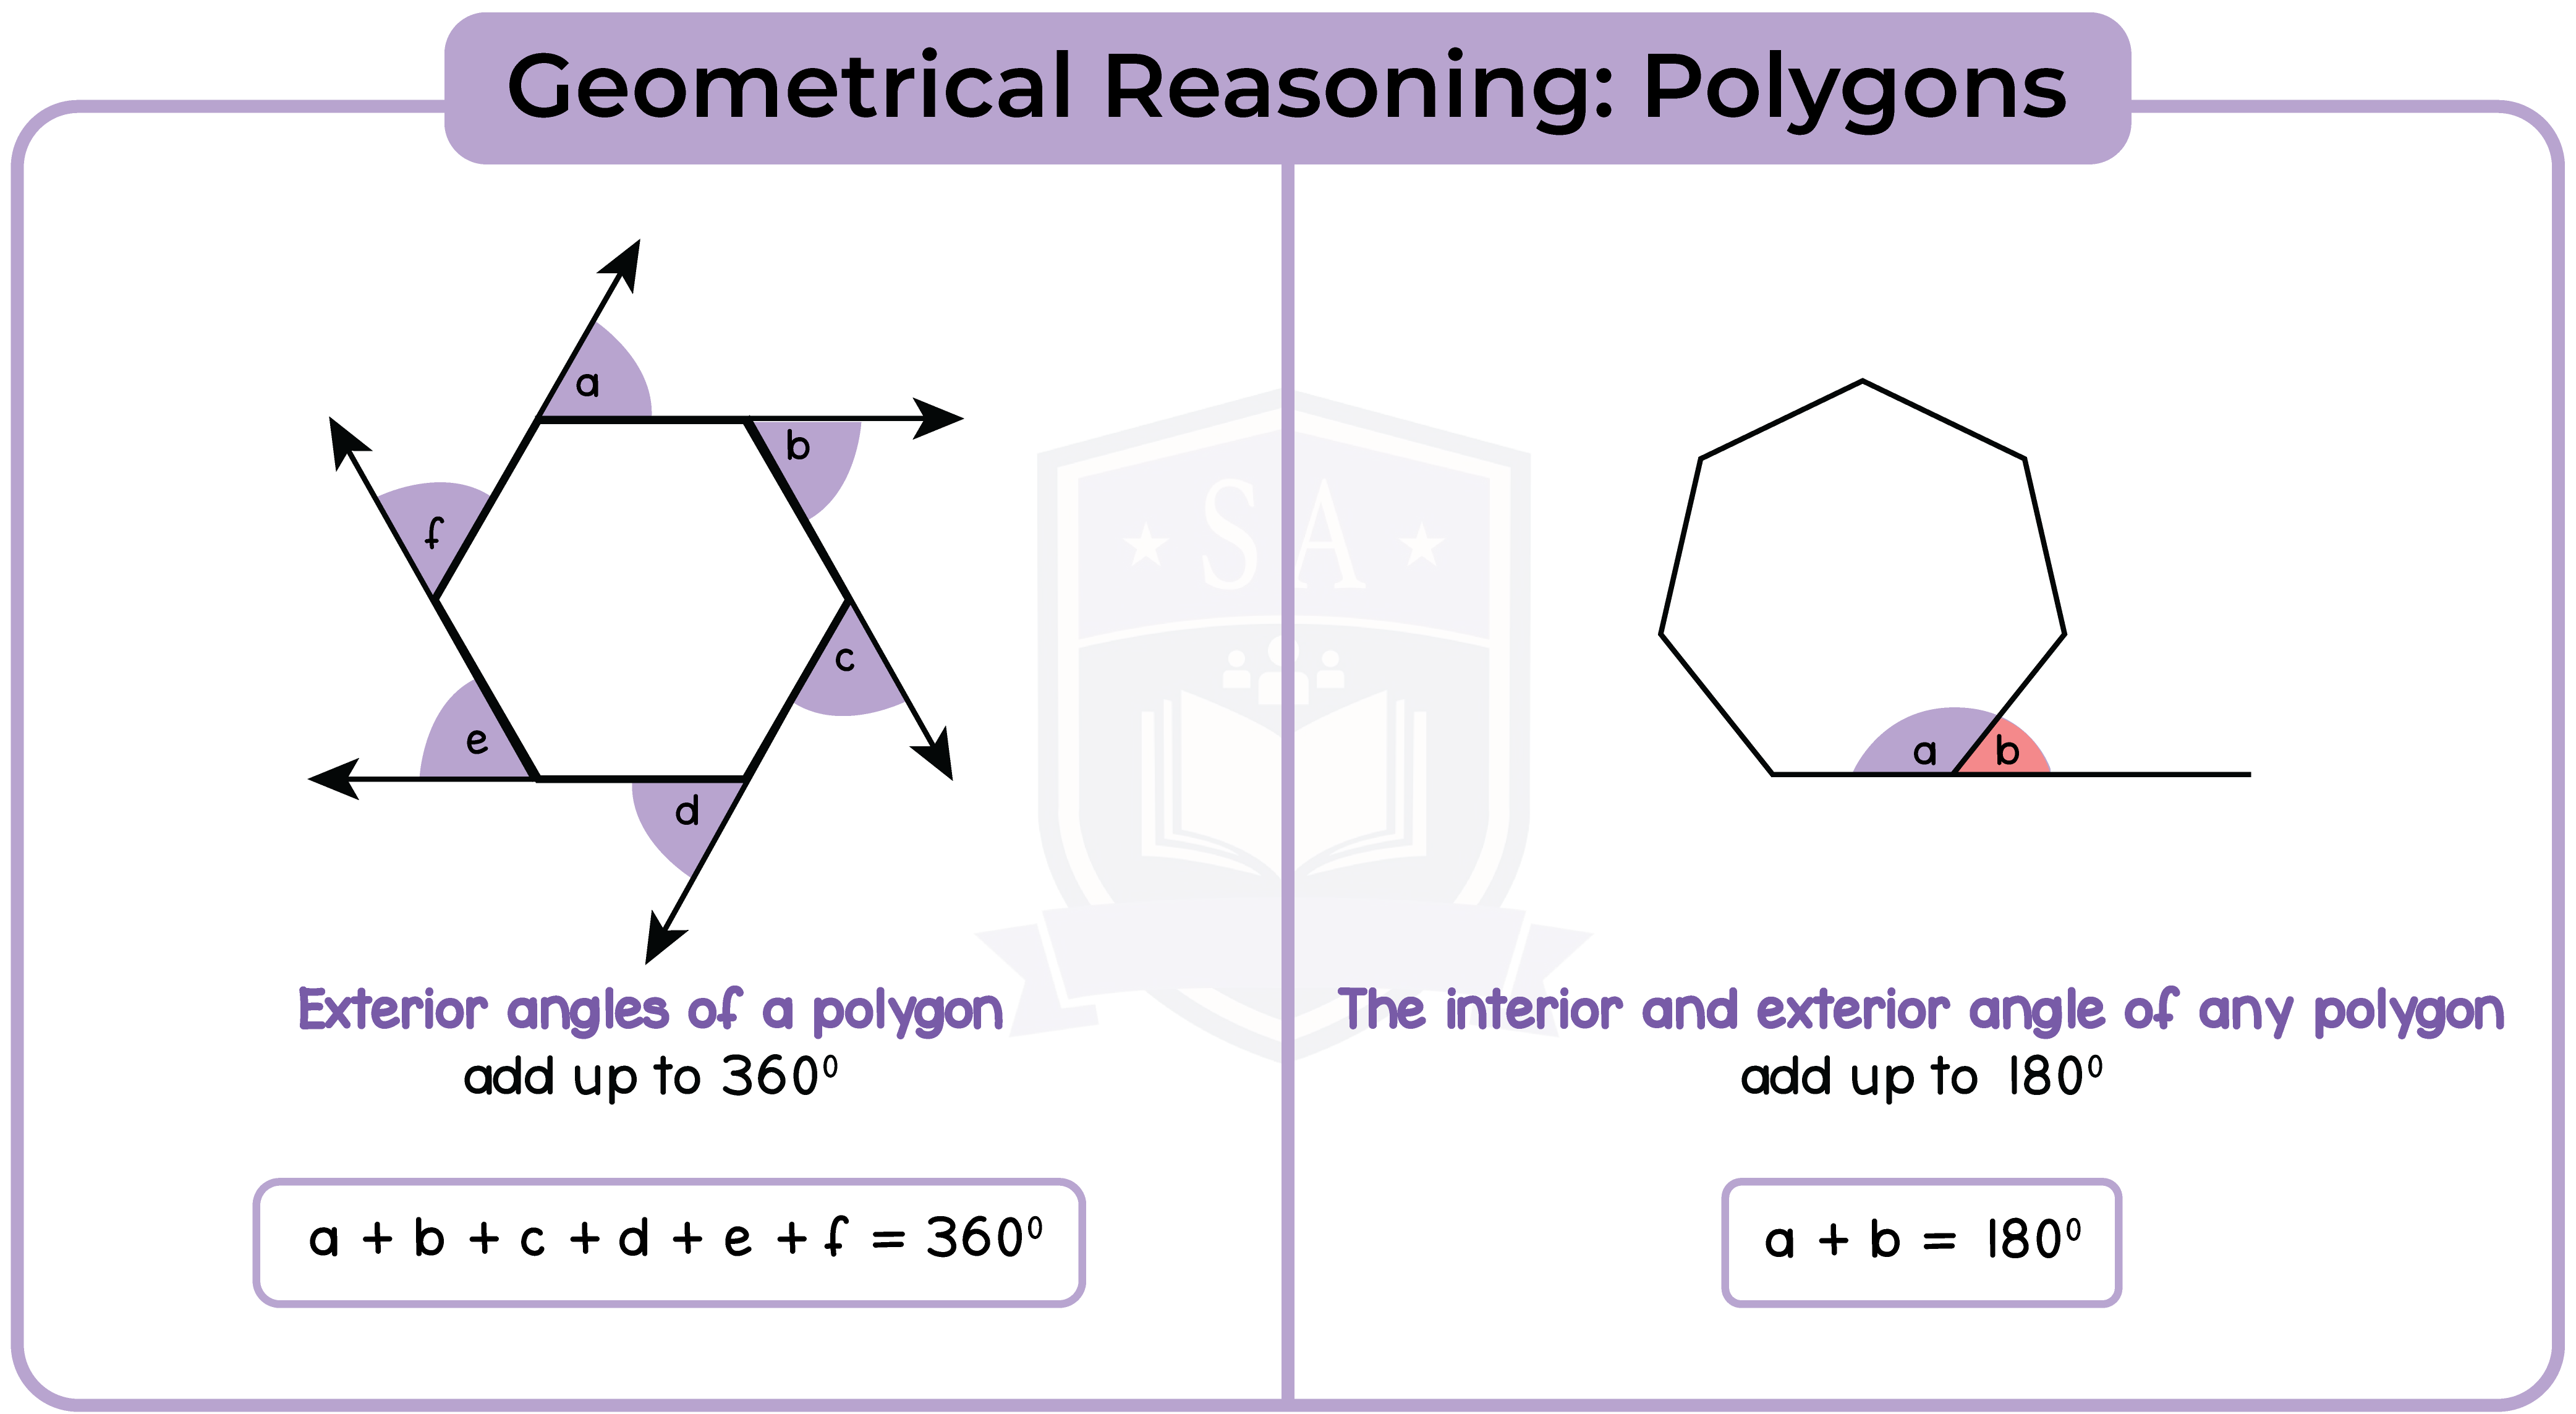 edexcel_igcse_mathematics a_topic 31_geometric reasoning_002_Geometrical Reasoning: Polygons